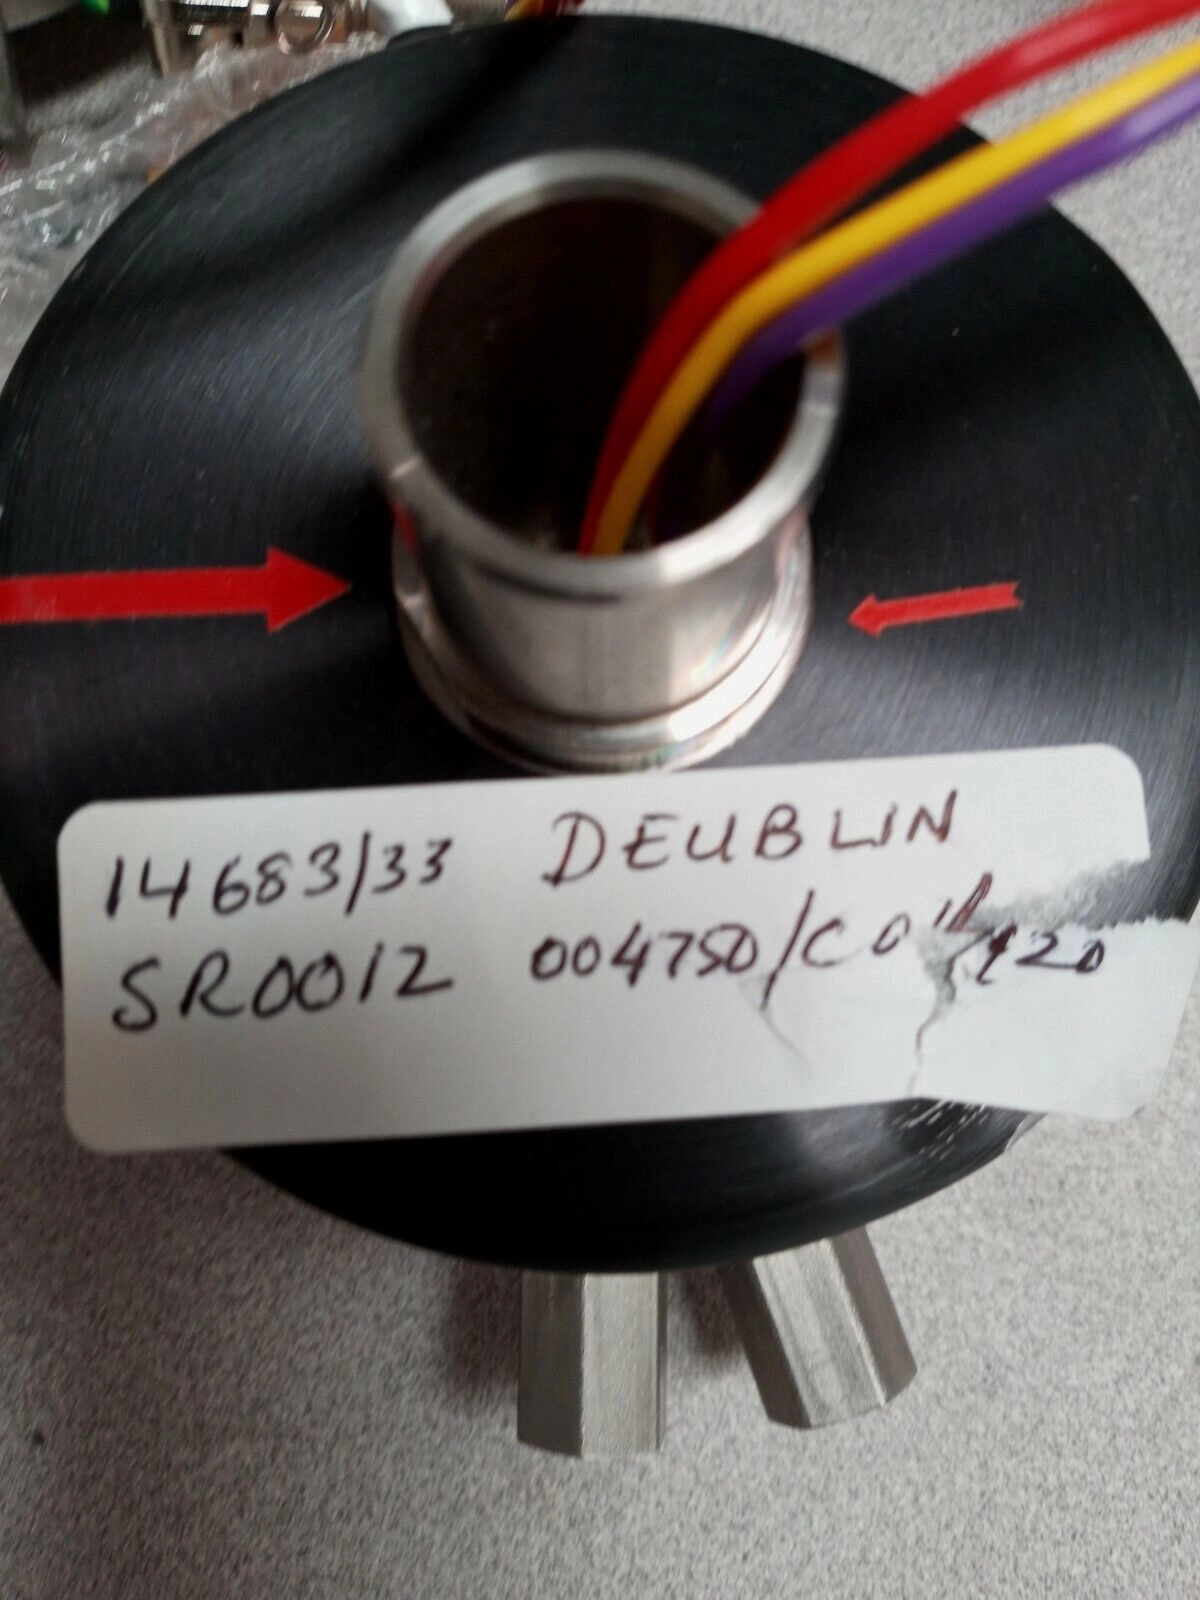 Deublin SR0012 electrical Rotary Union Slip Ring  